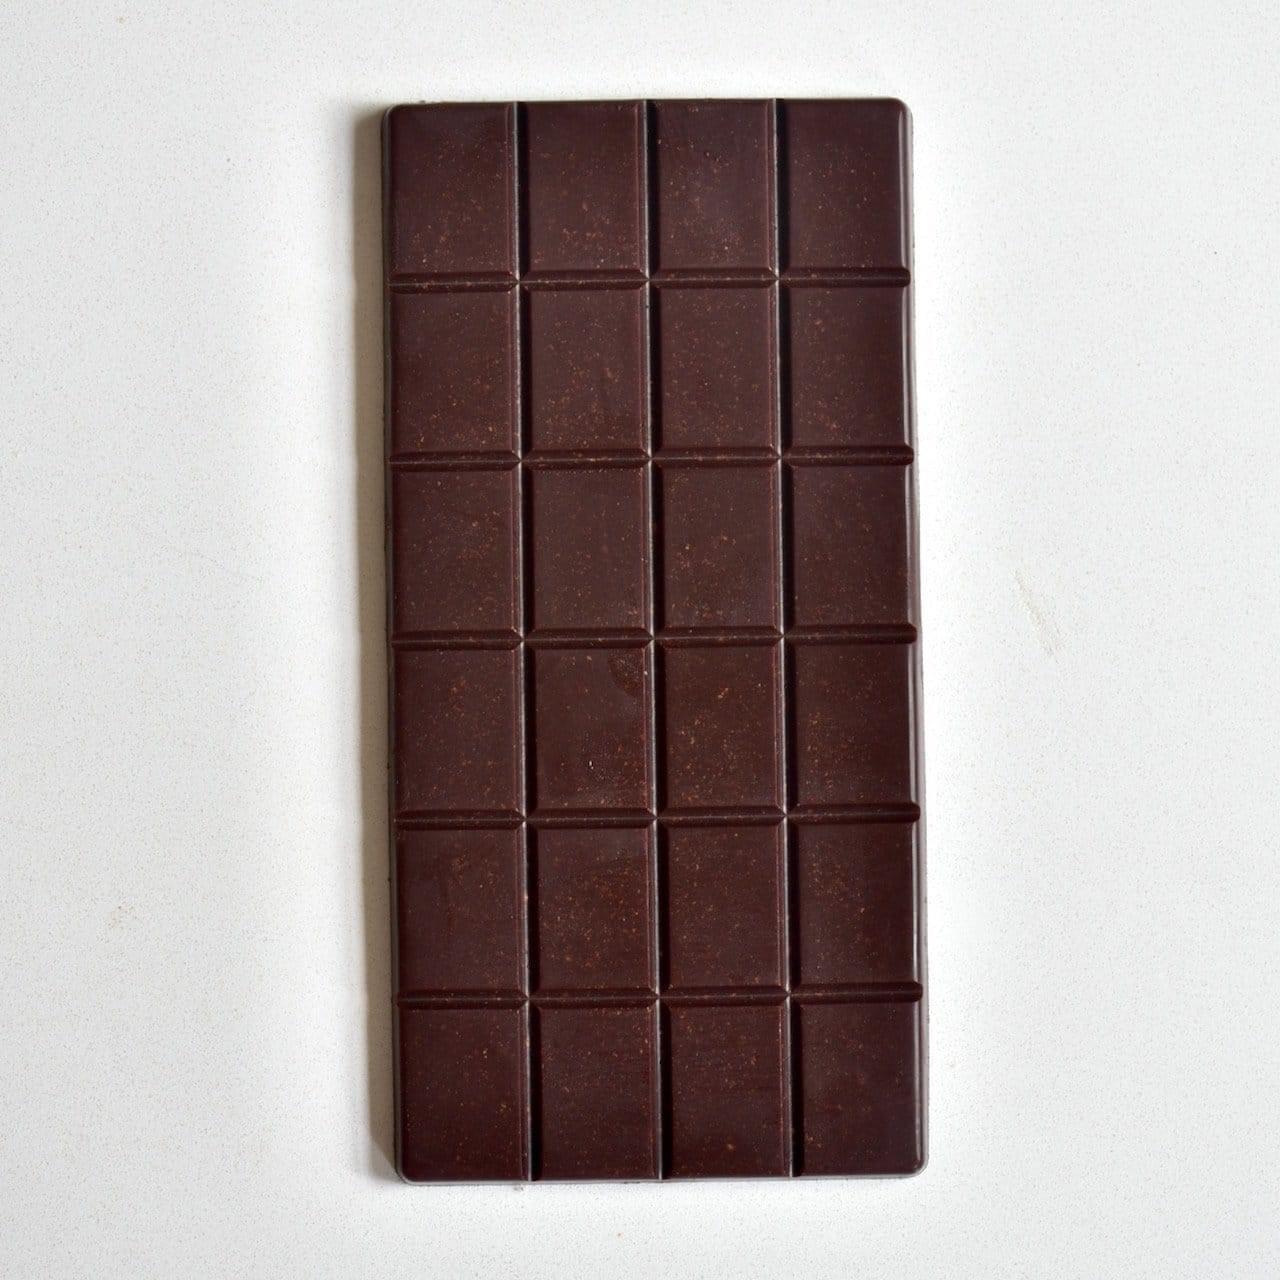 Homemade Dark chocolate bar 